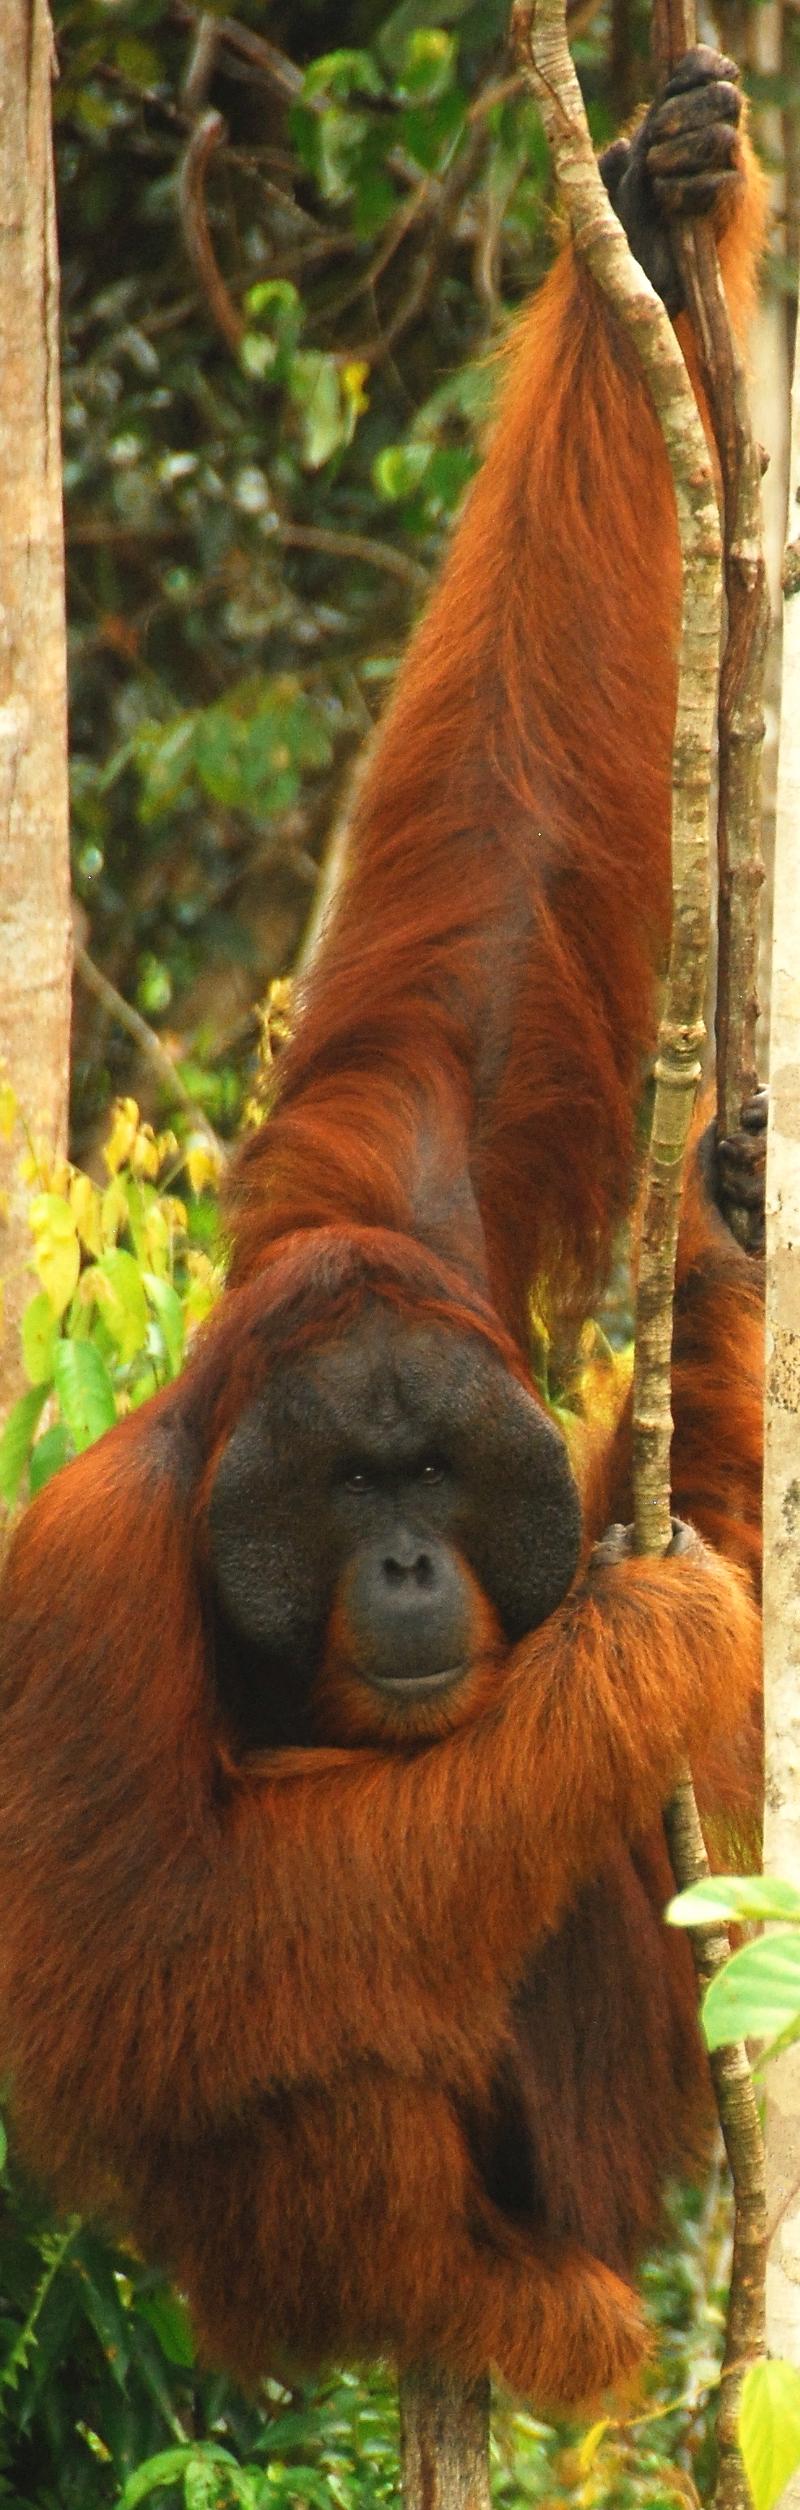 Large, male orangutan